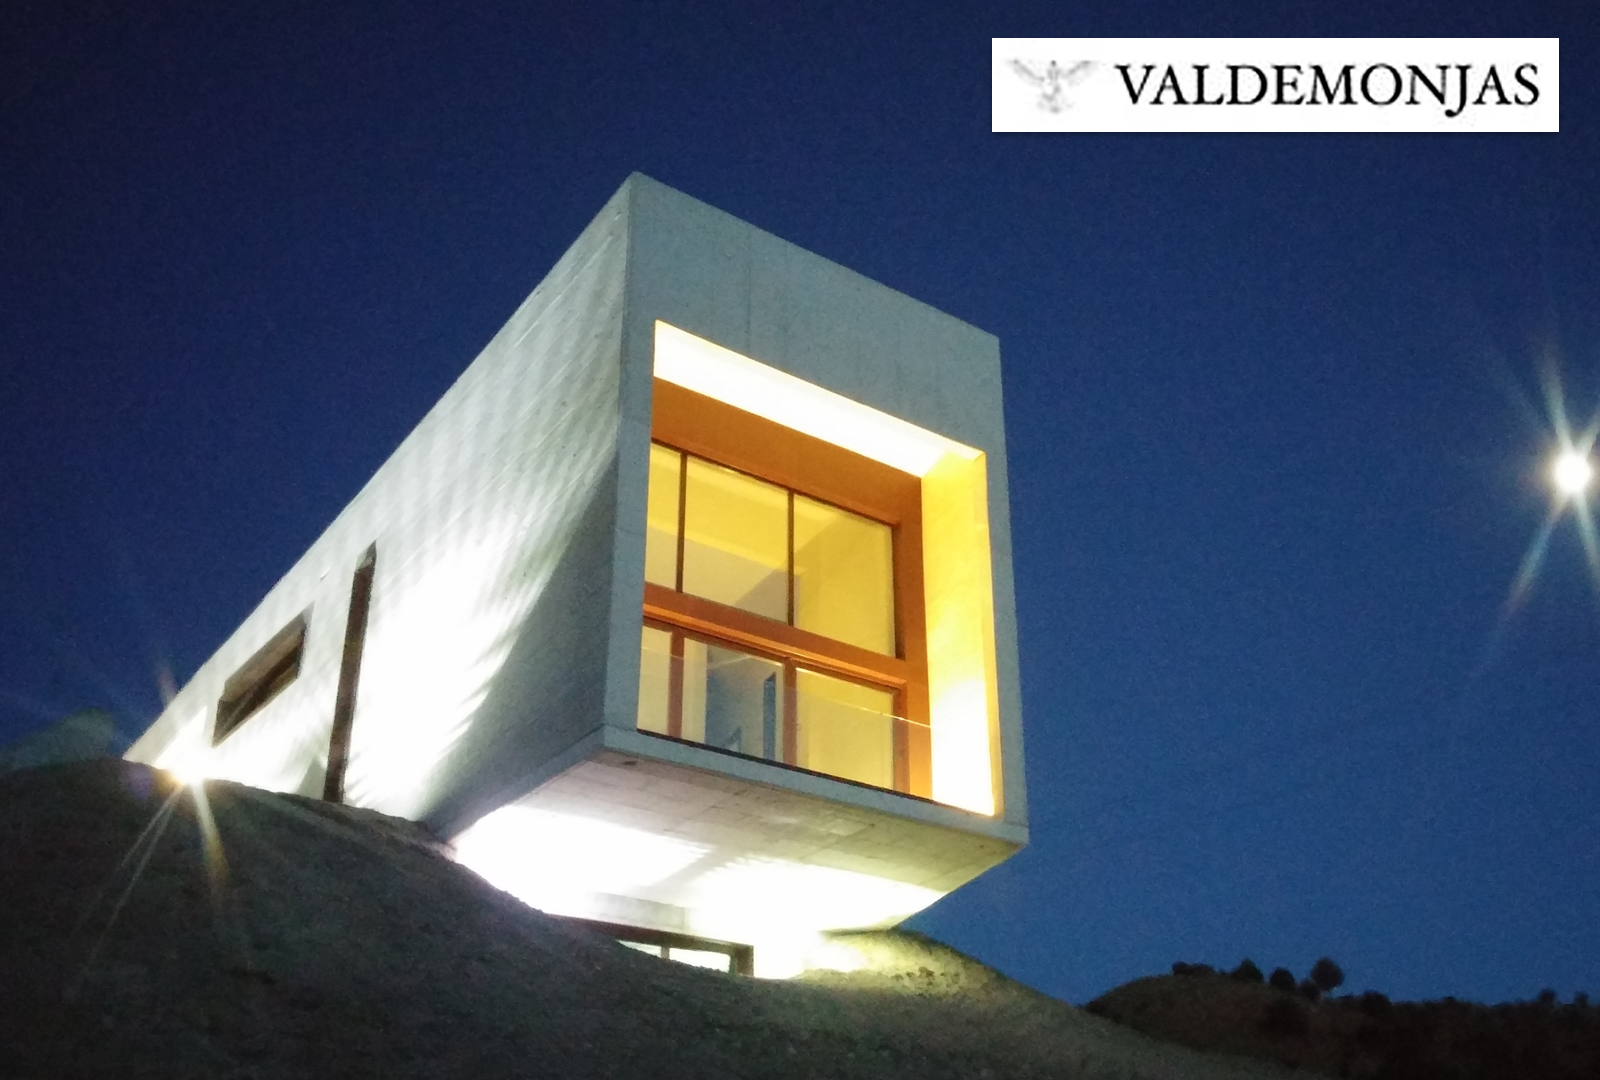 Valdemonjas, finalista premios Architizer A+ de arquitectura. - VINOS DIFERENTES